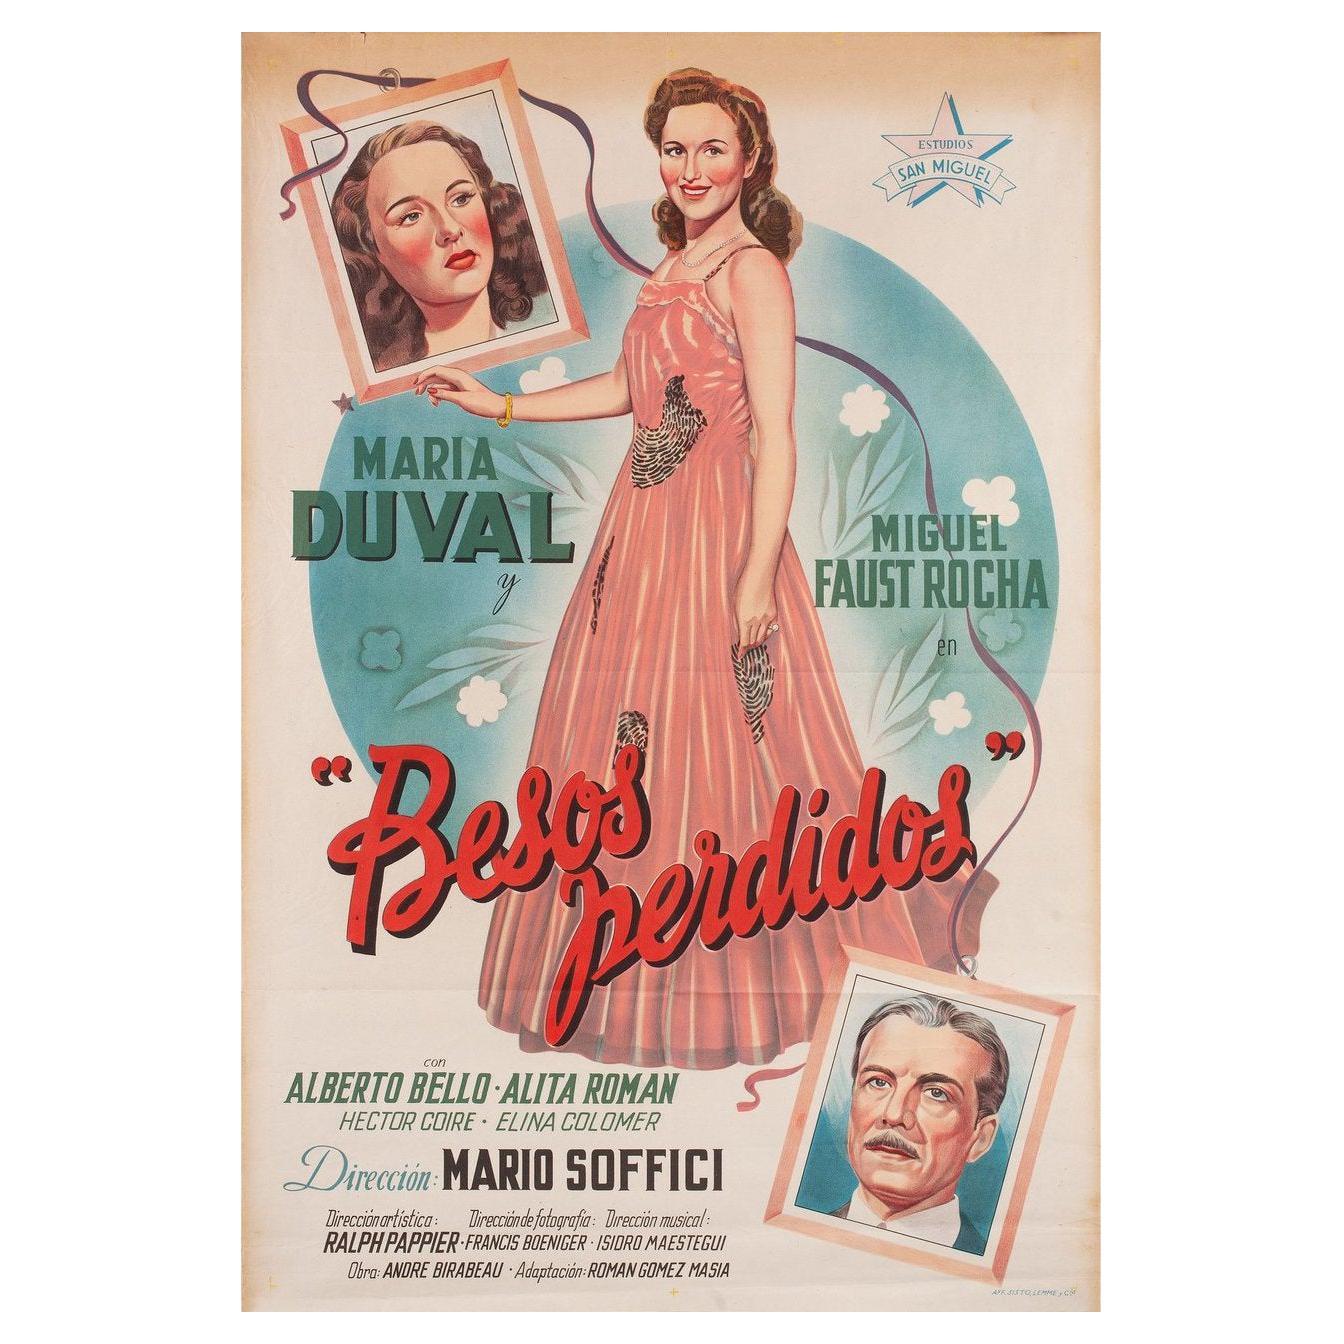 Besos perdidos 1945 Argentine Film PosterERT